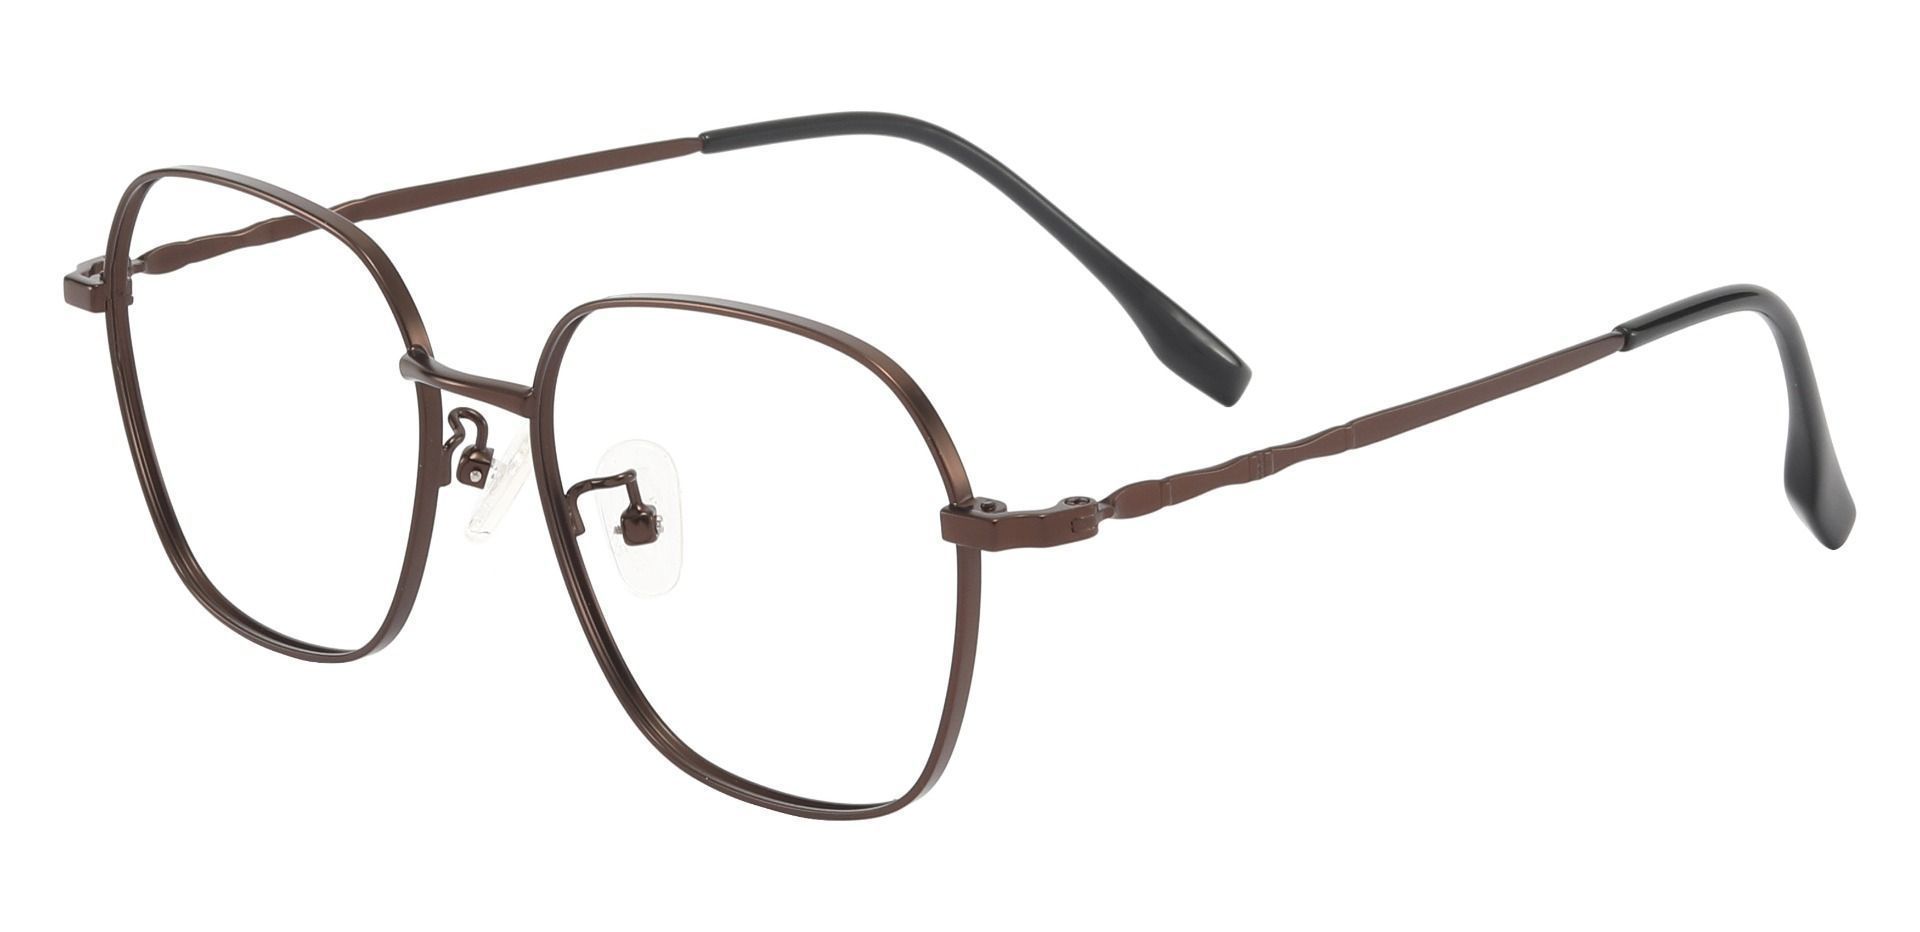 Crest Geometric Prescription Glasses - Brown